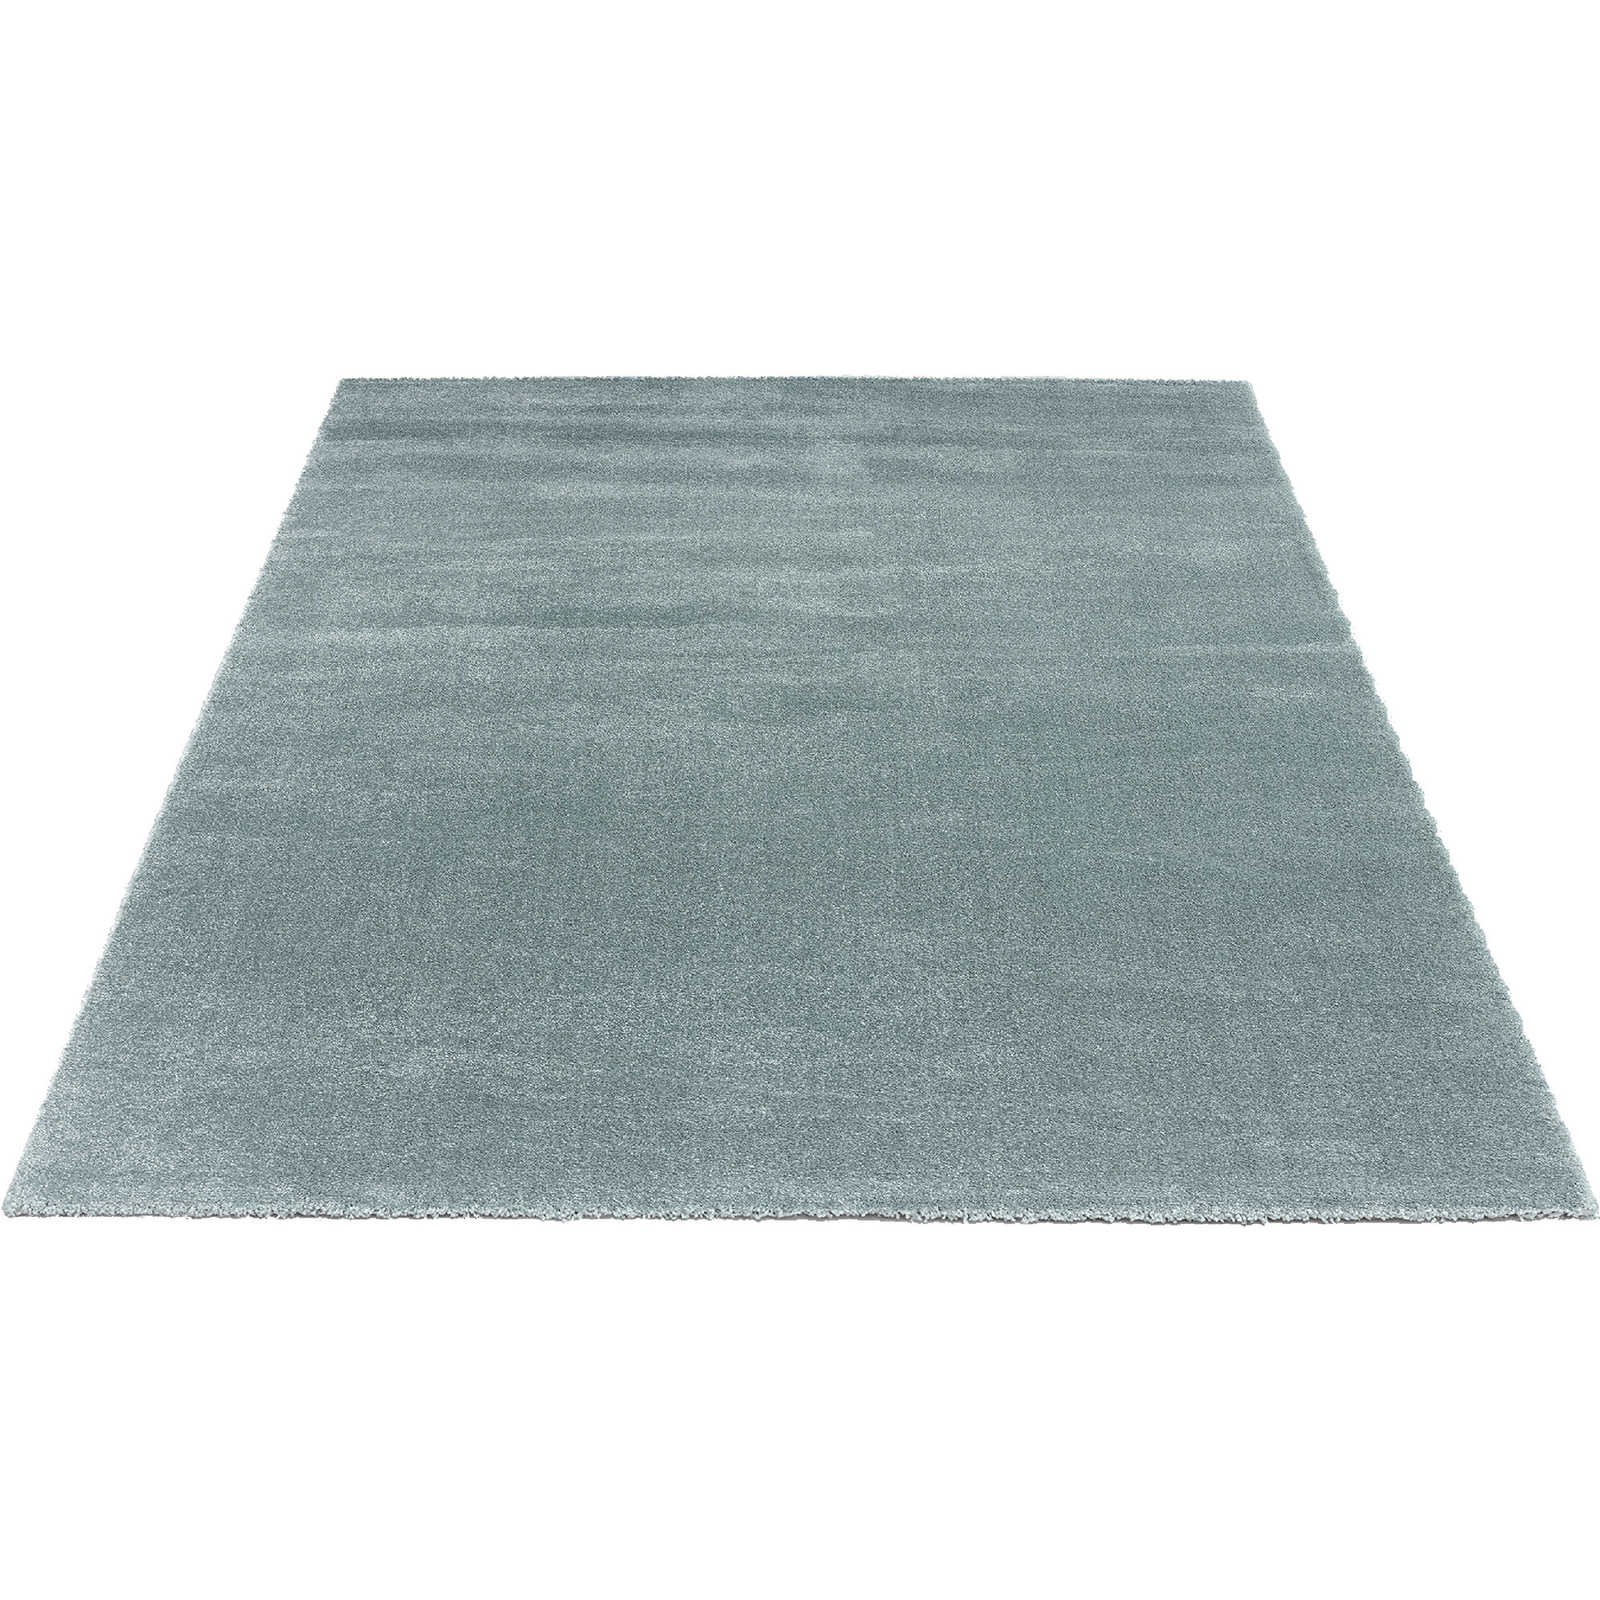 Simple short pile carpet in blue - 290 x 200 cm
